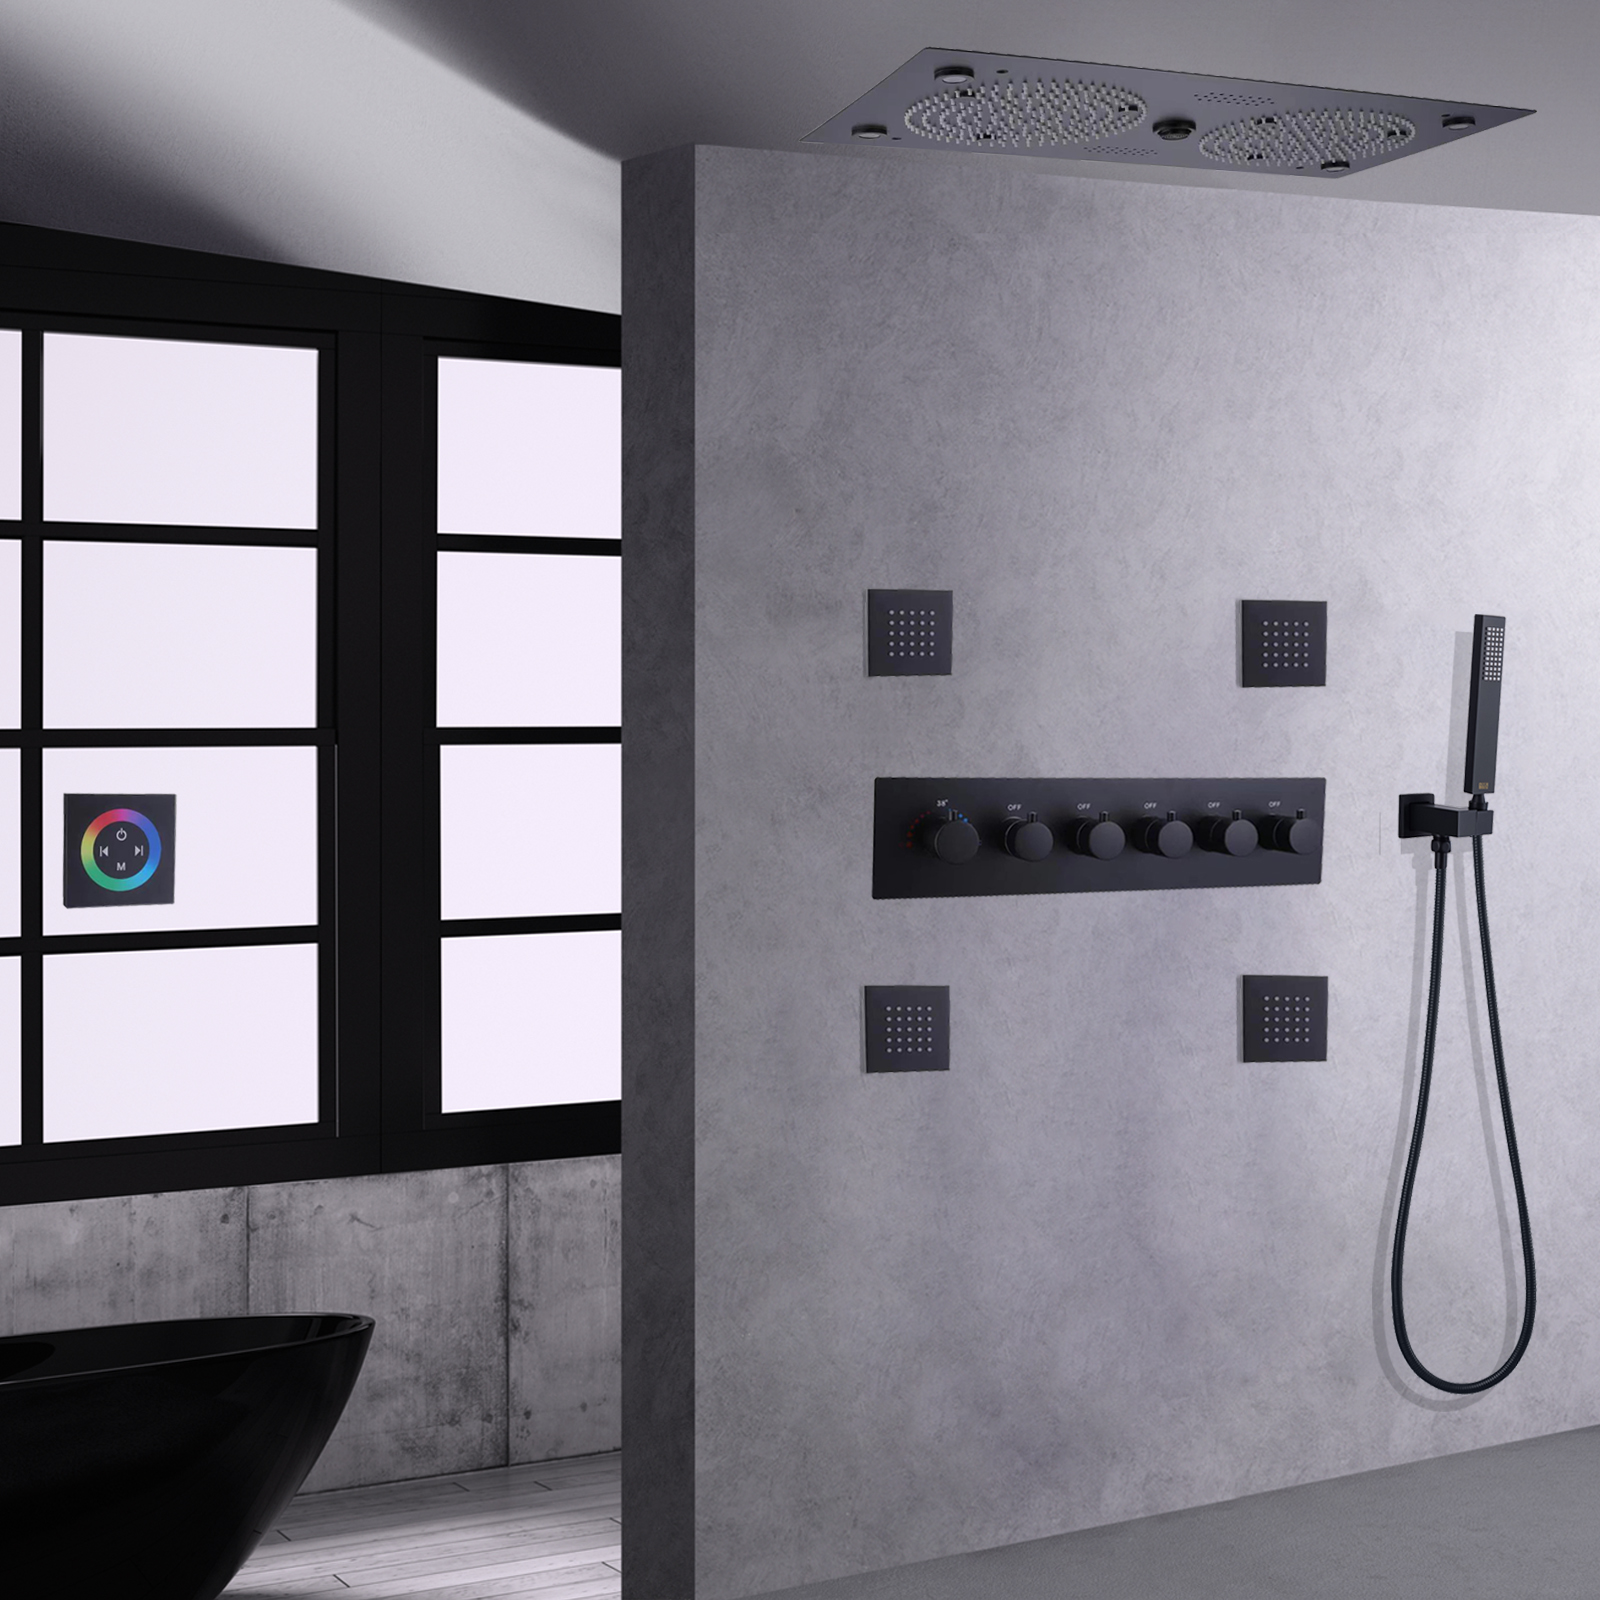 Matte Black LED Music Shower Systems Bathroom Bath Concealed Faucet Thermostatic Rainfall Shower Set